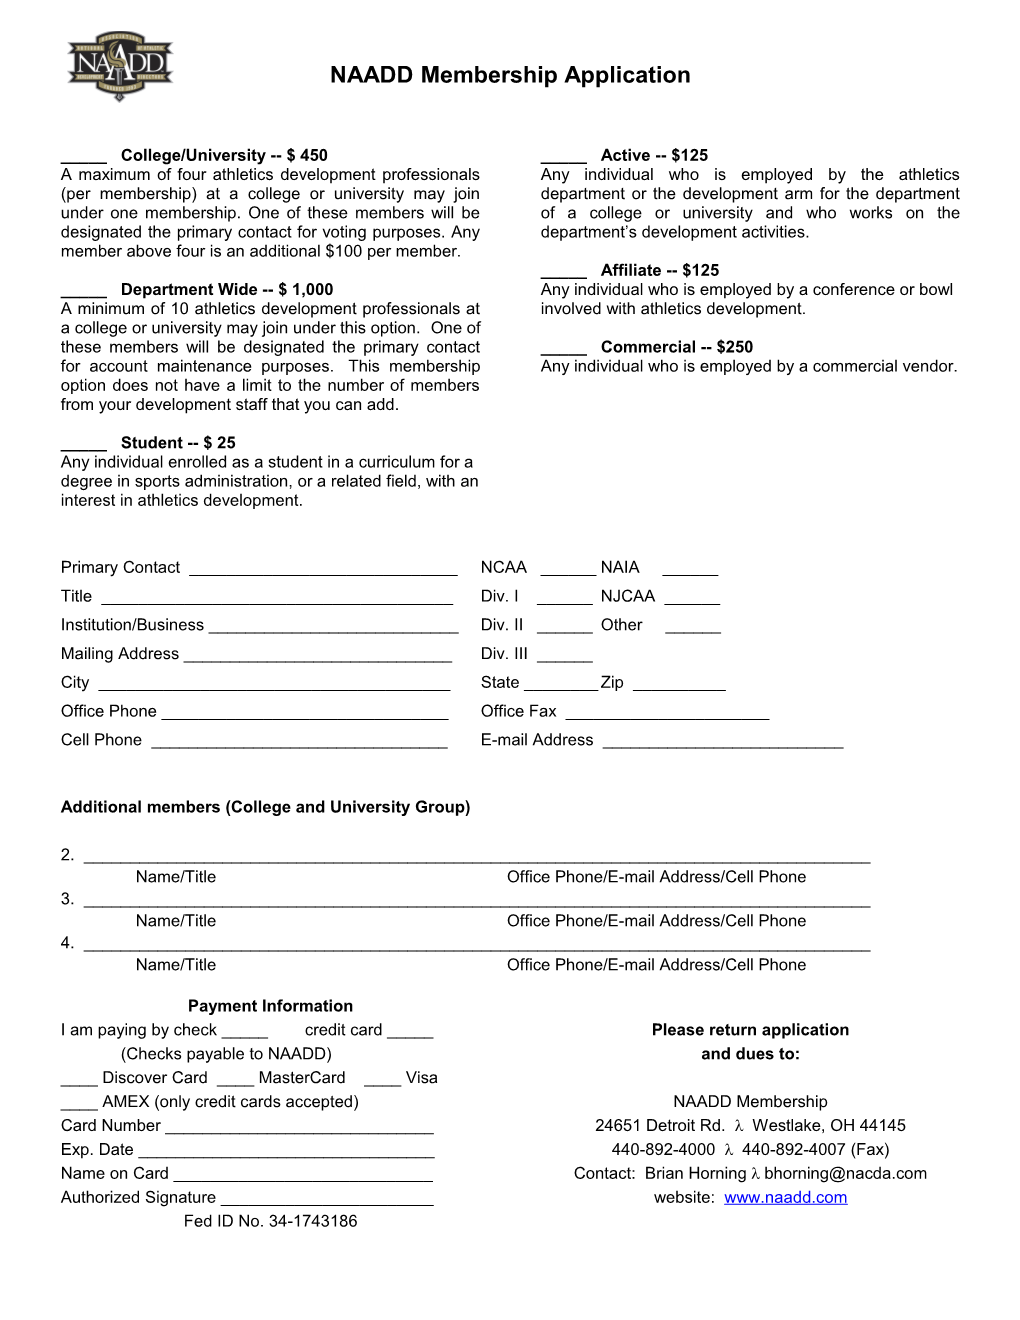 NACMA Membership Application